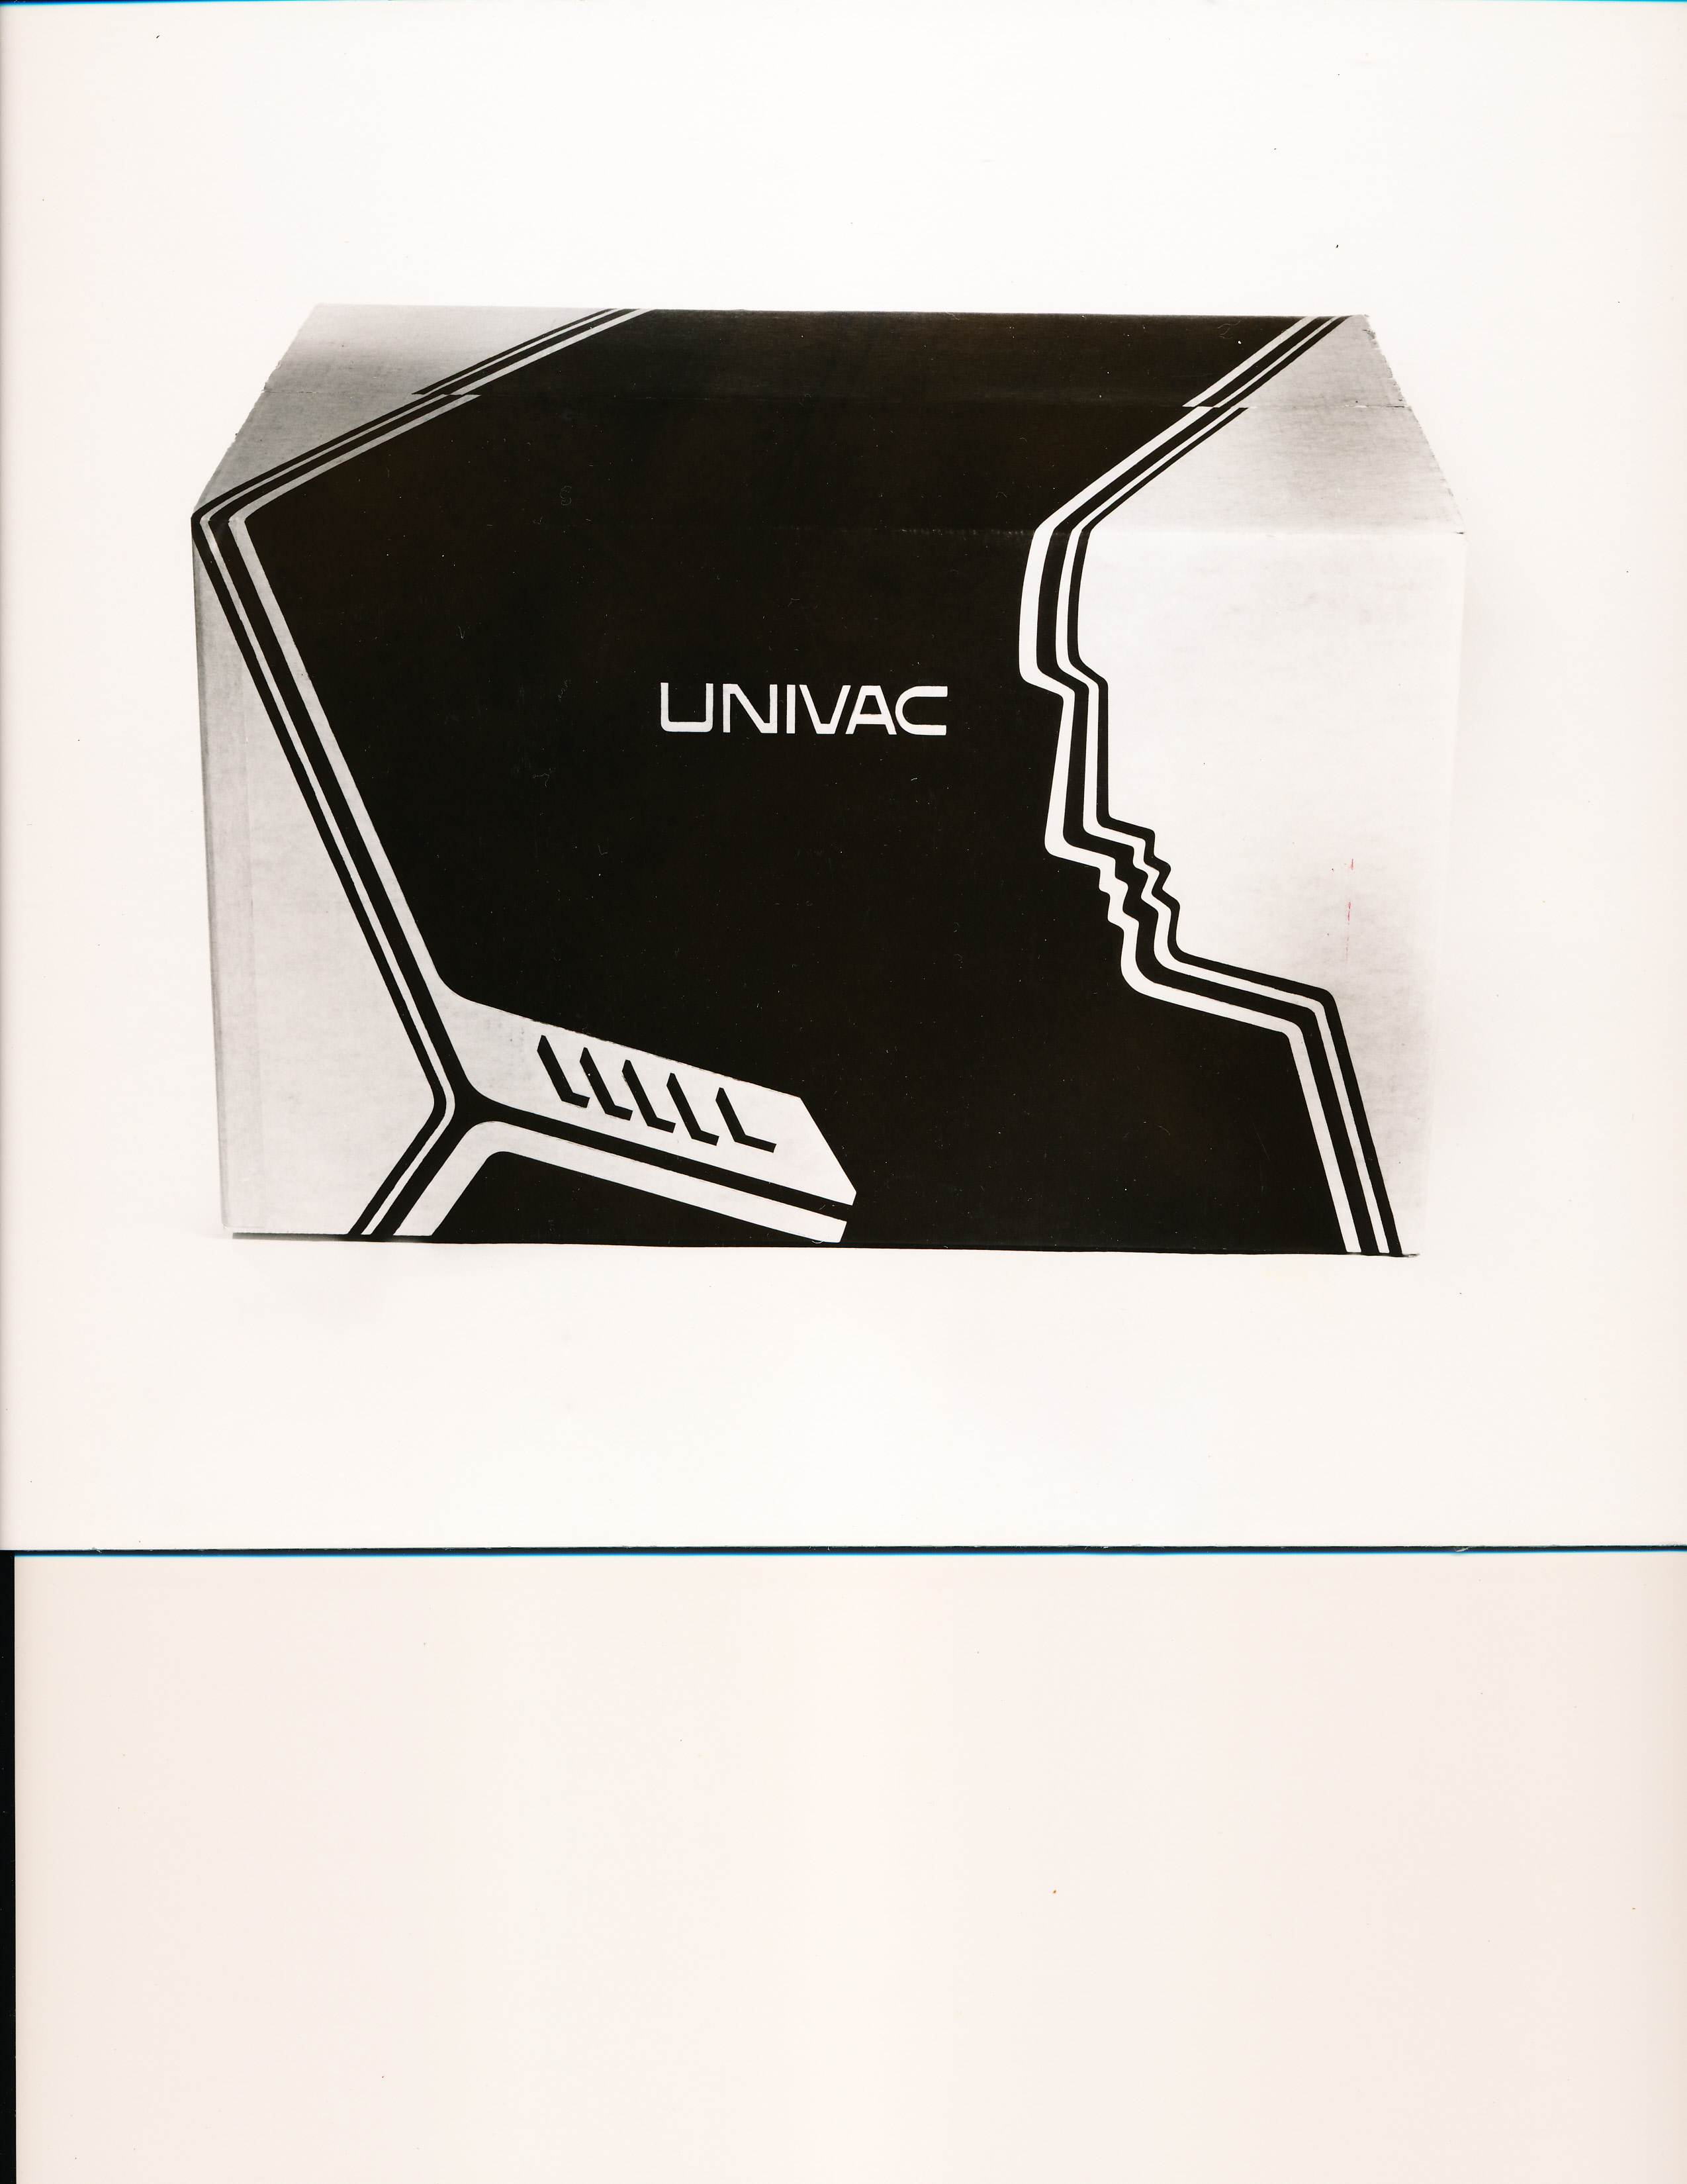 IMG Uniscope 100 shipping carton, featuring KB image.jpg